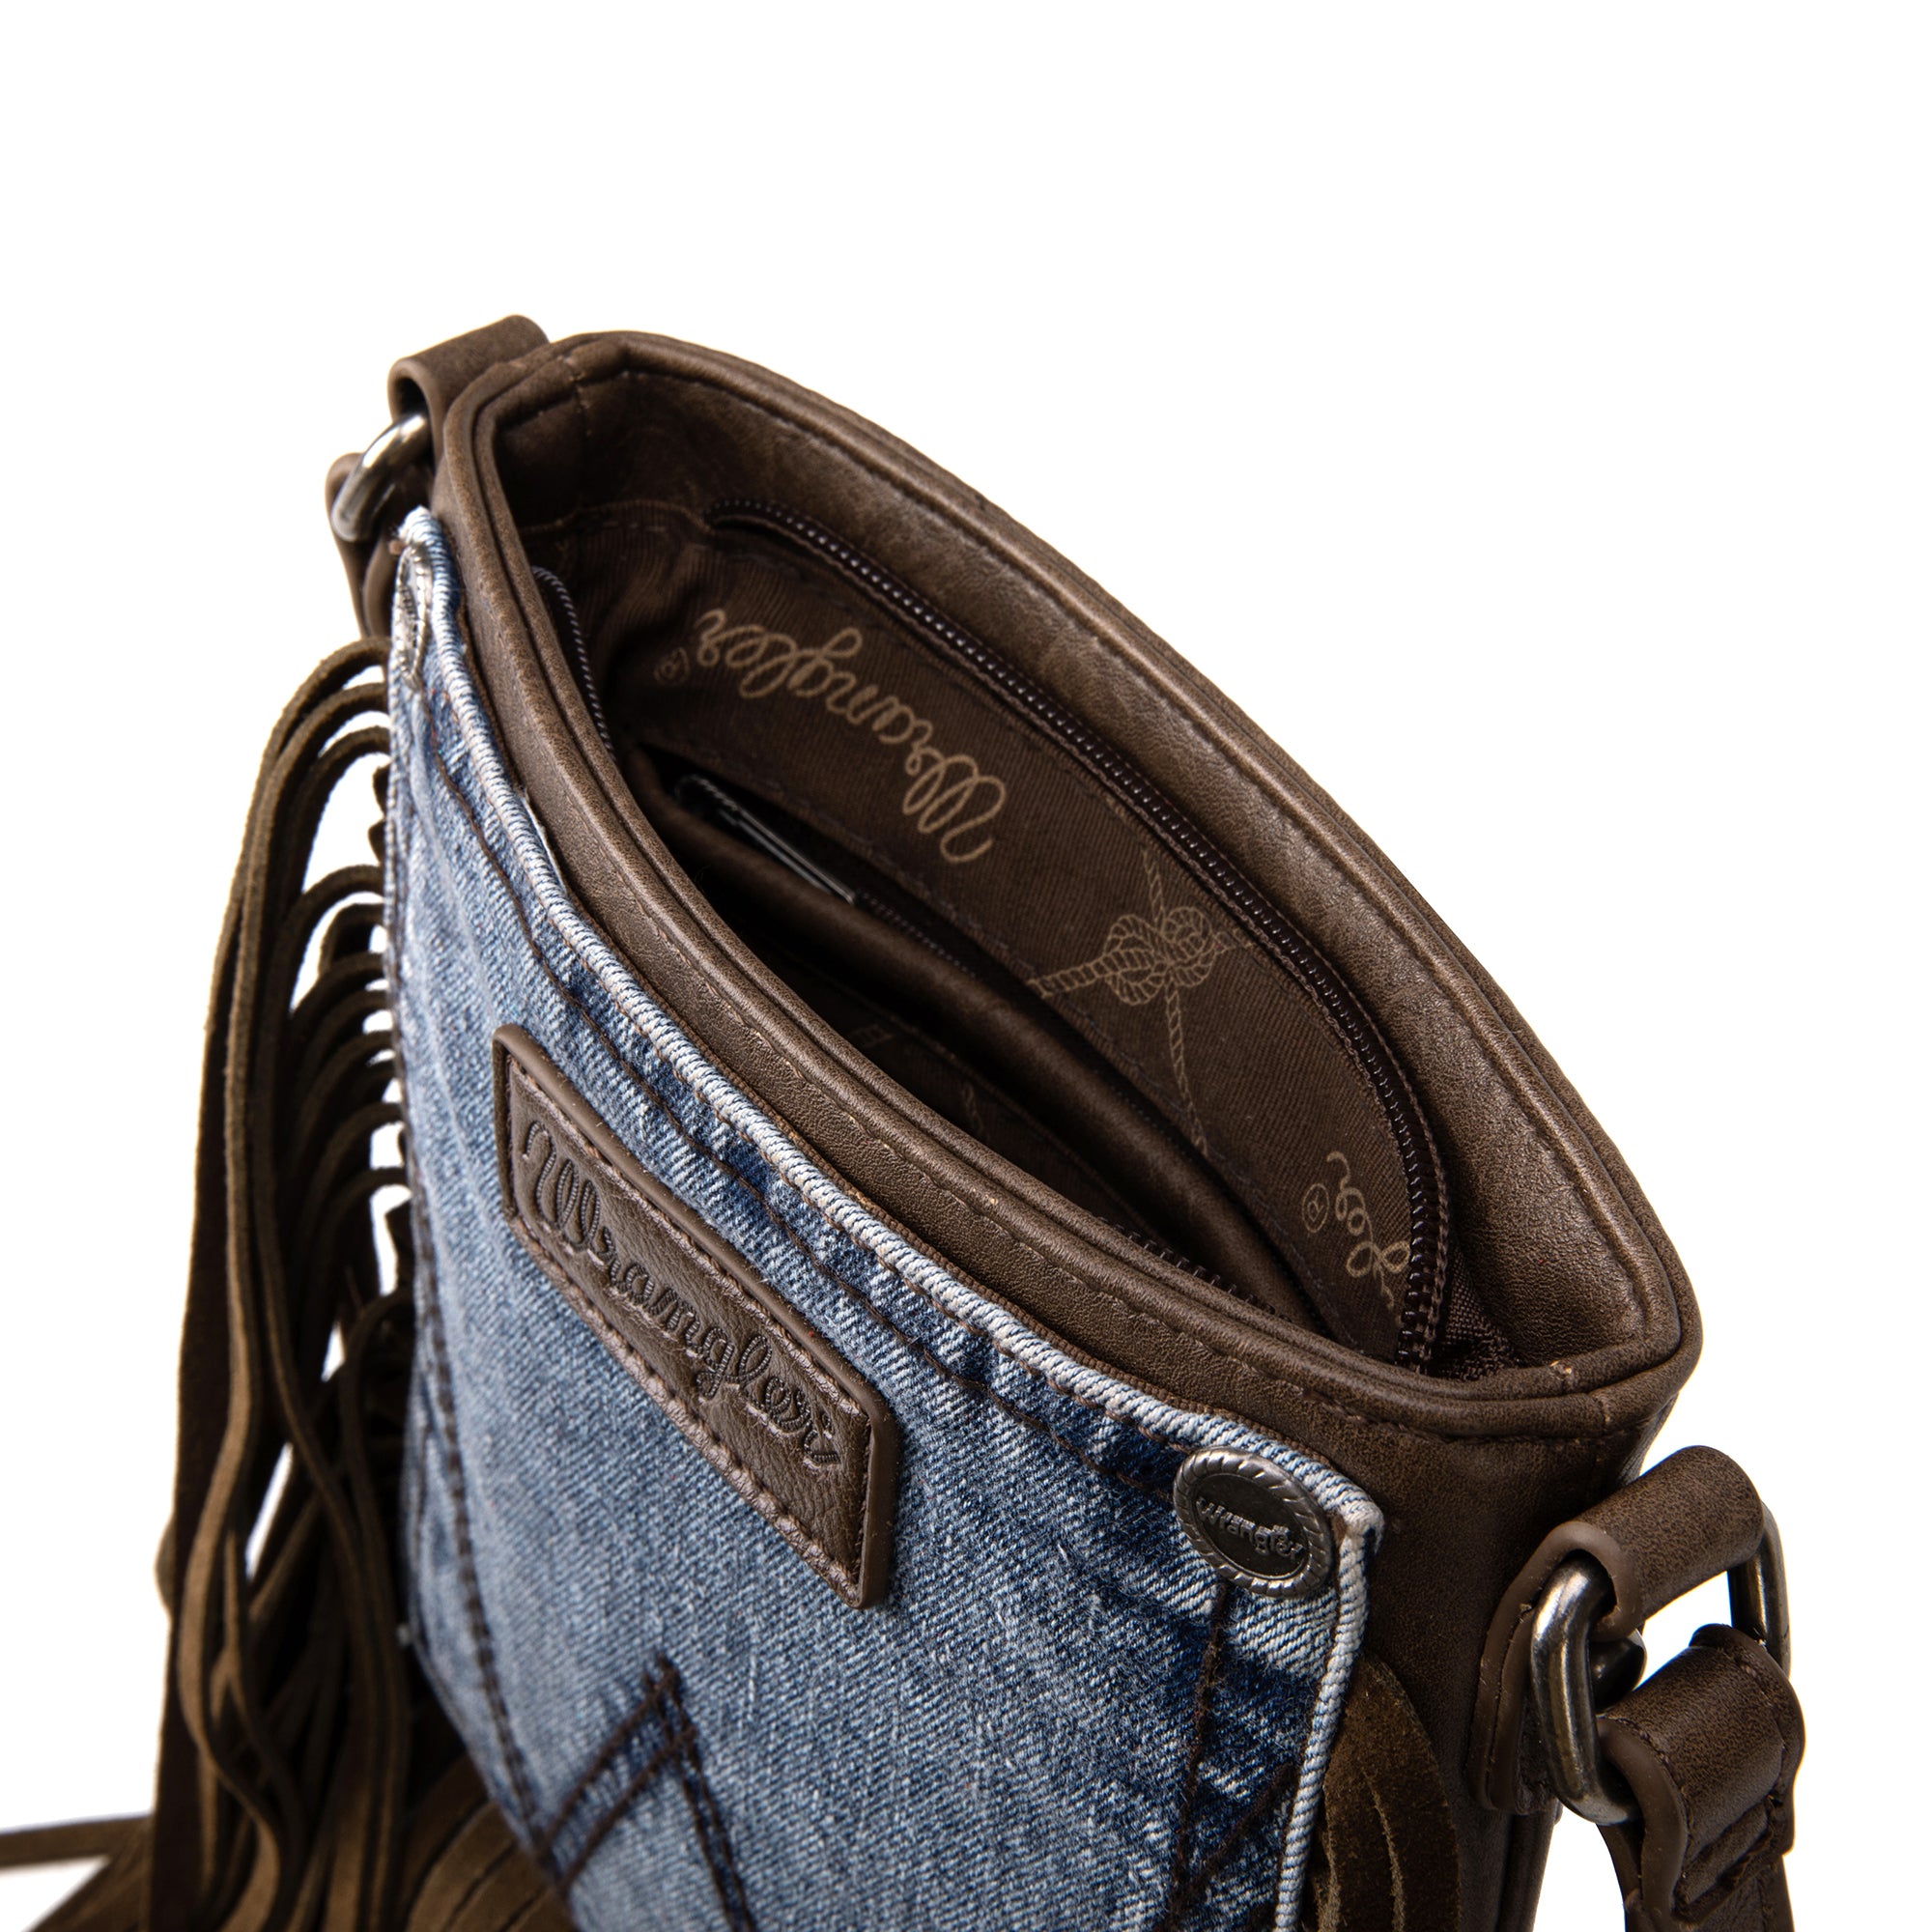 Wrangler Signature Pocket Crossbody Bag for Women Genuine Leather Fringe  Purse, Beige Denim, One Size: : Fashion